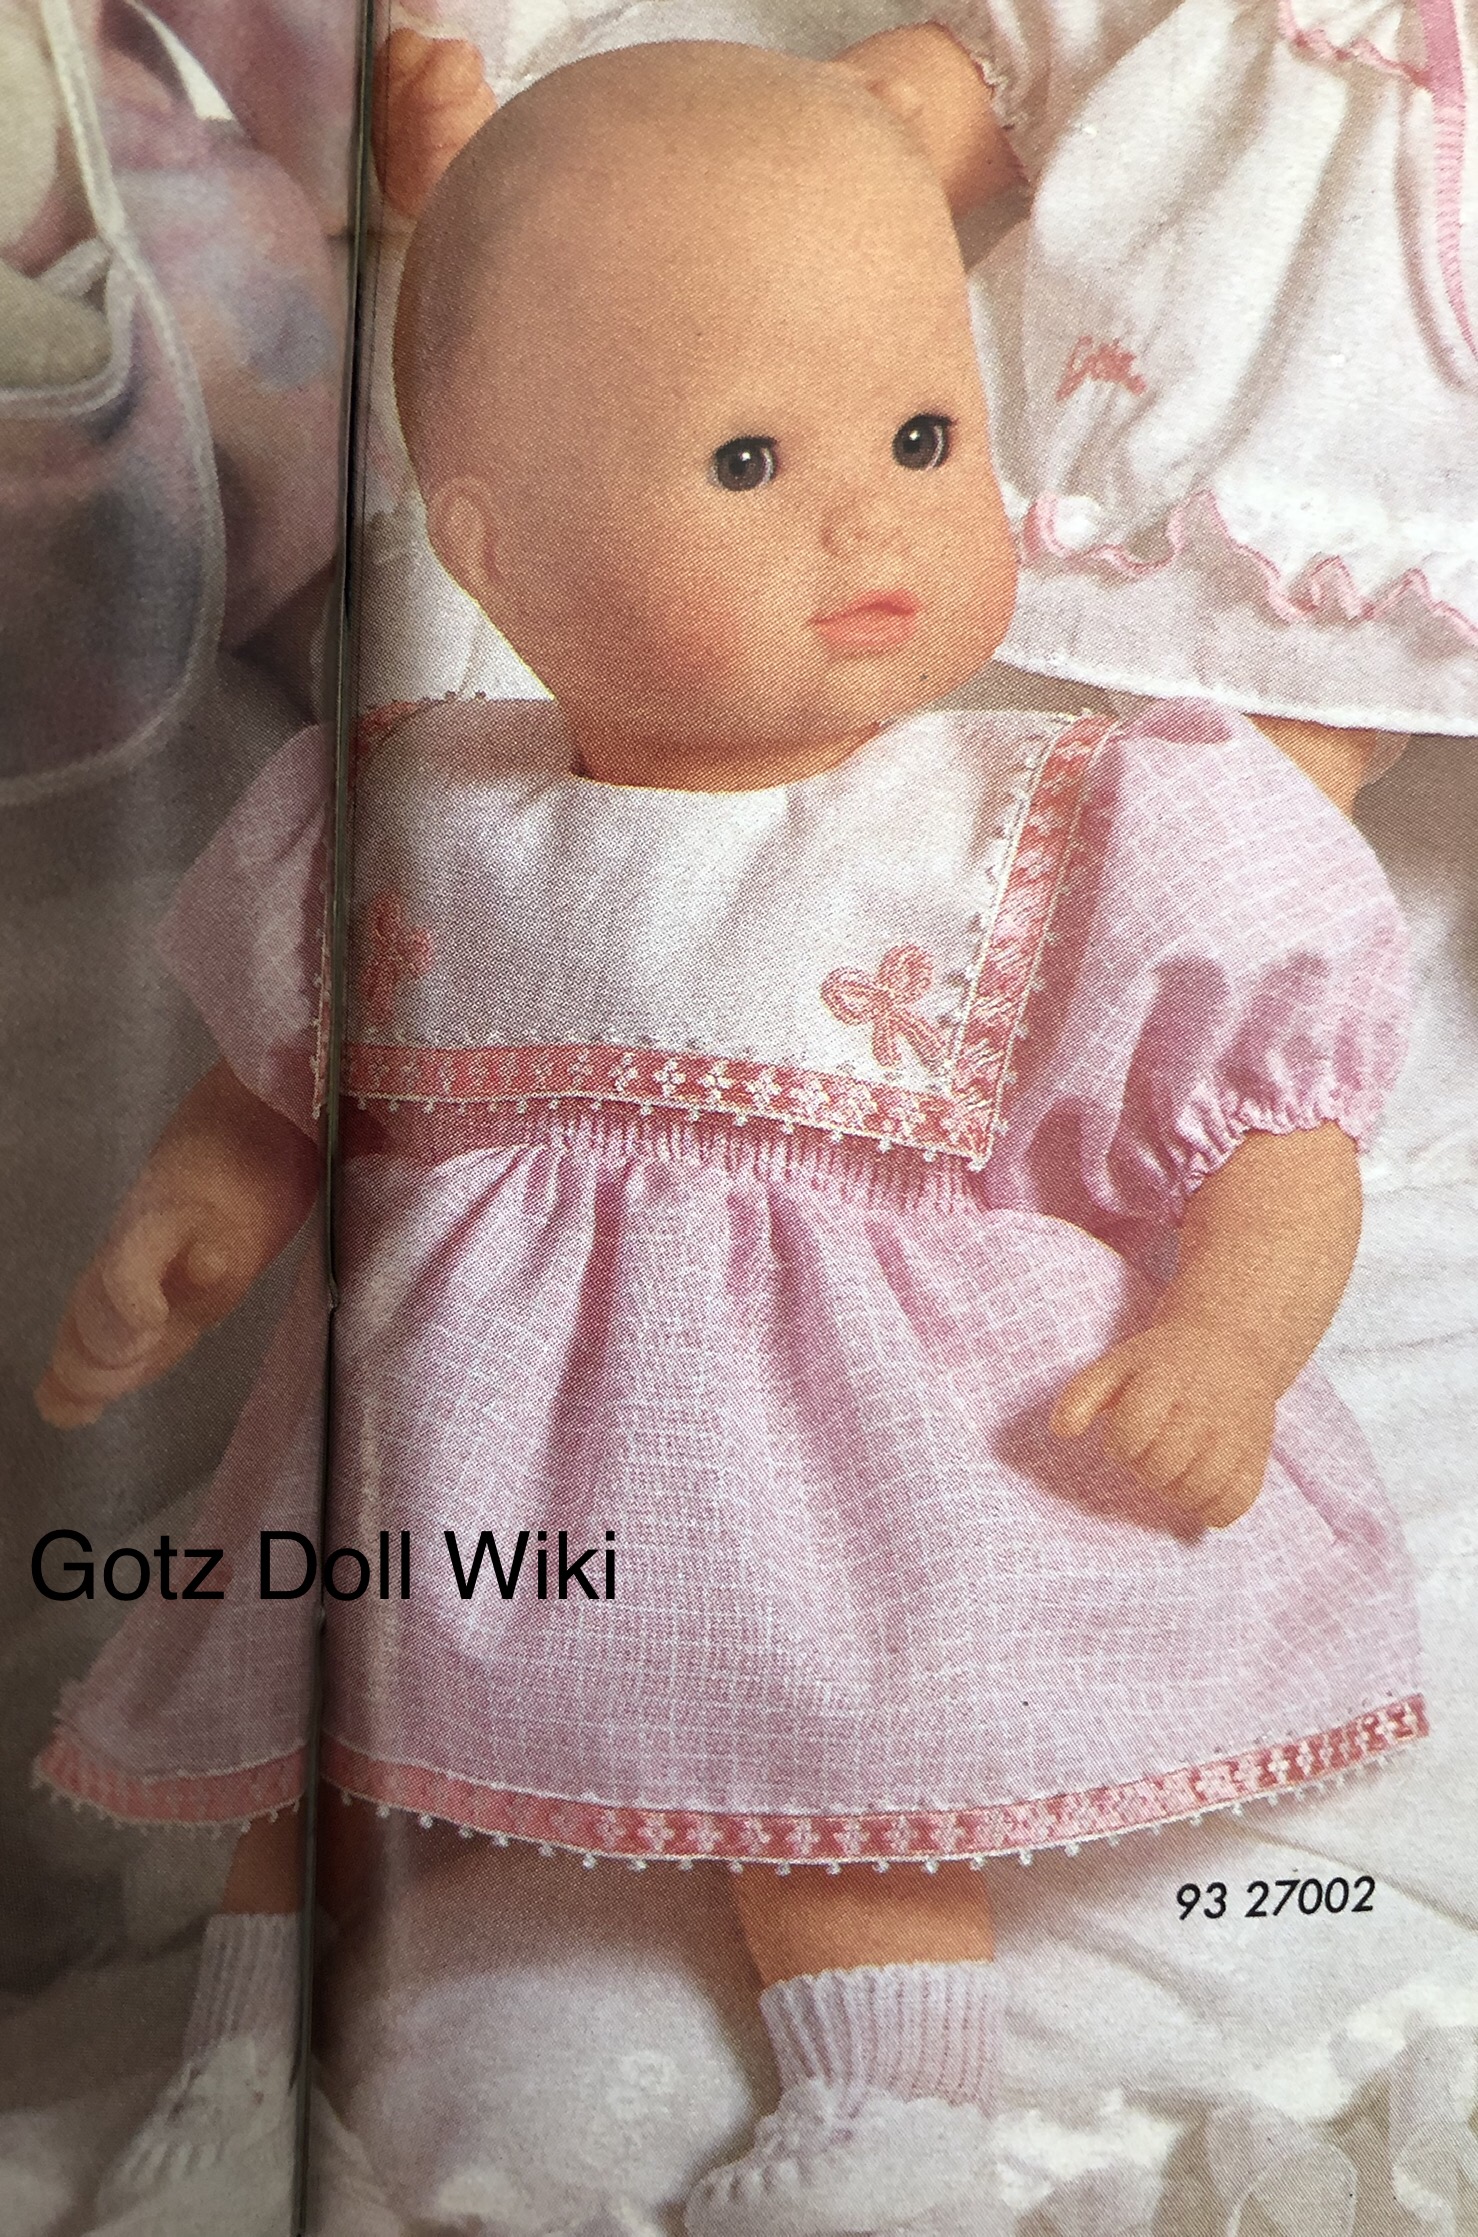 Vintage COROLLE 2000 Bald Baby Doll 52cm Pink Dress